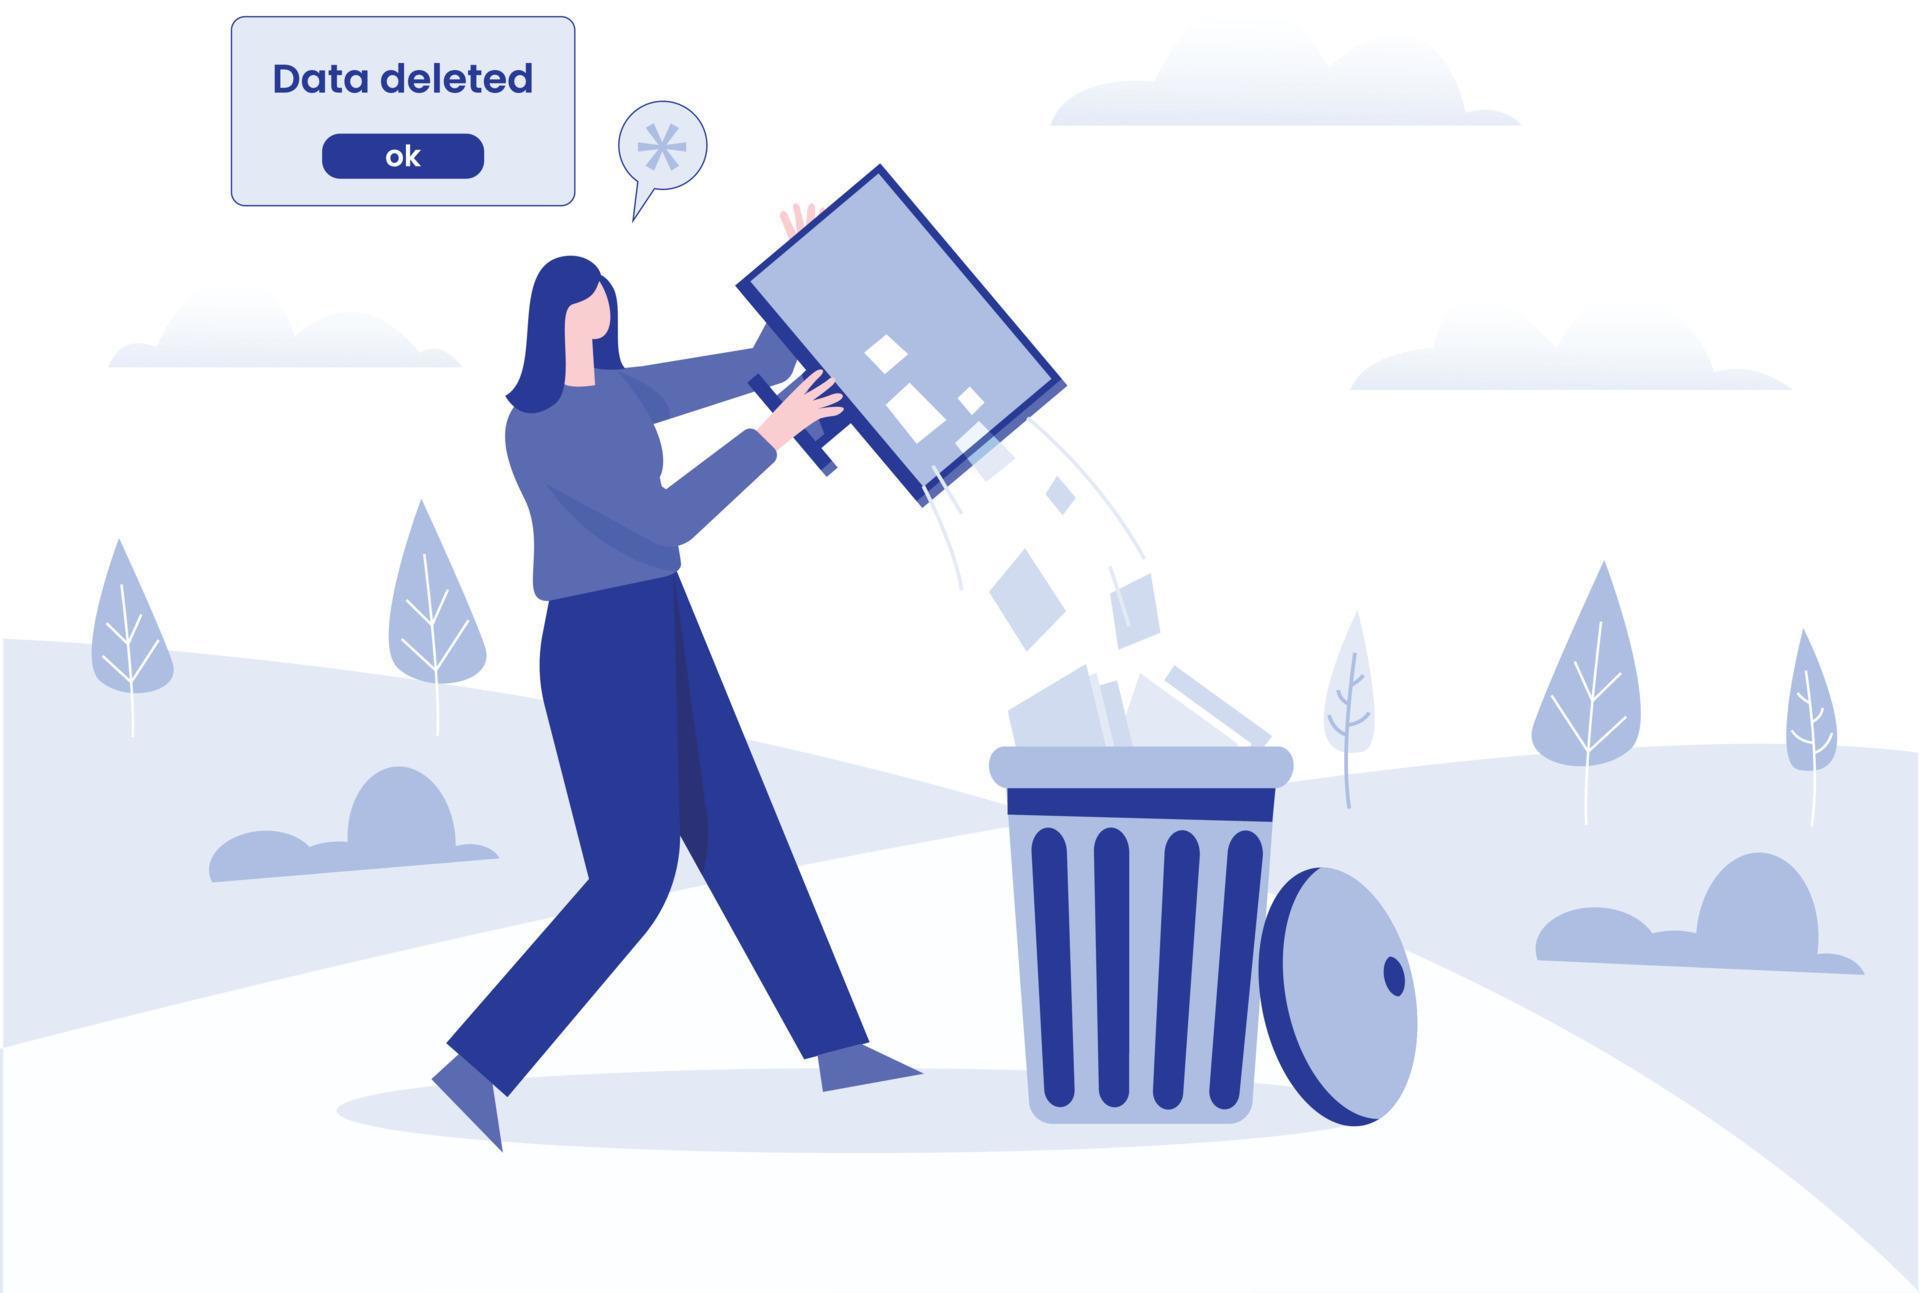 Where Do Deleted Files Go?